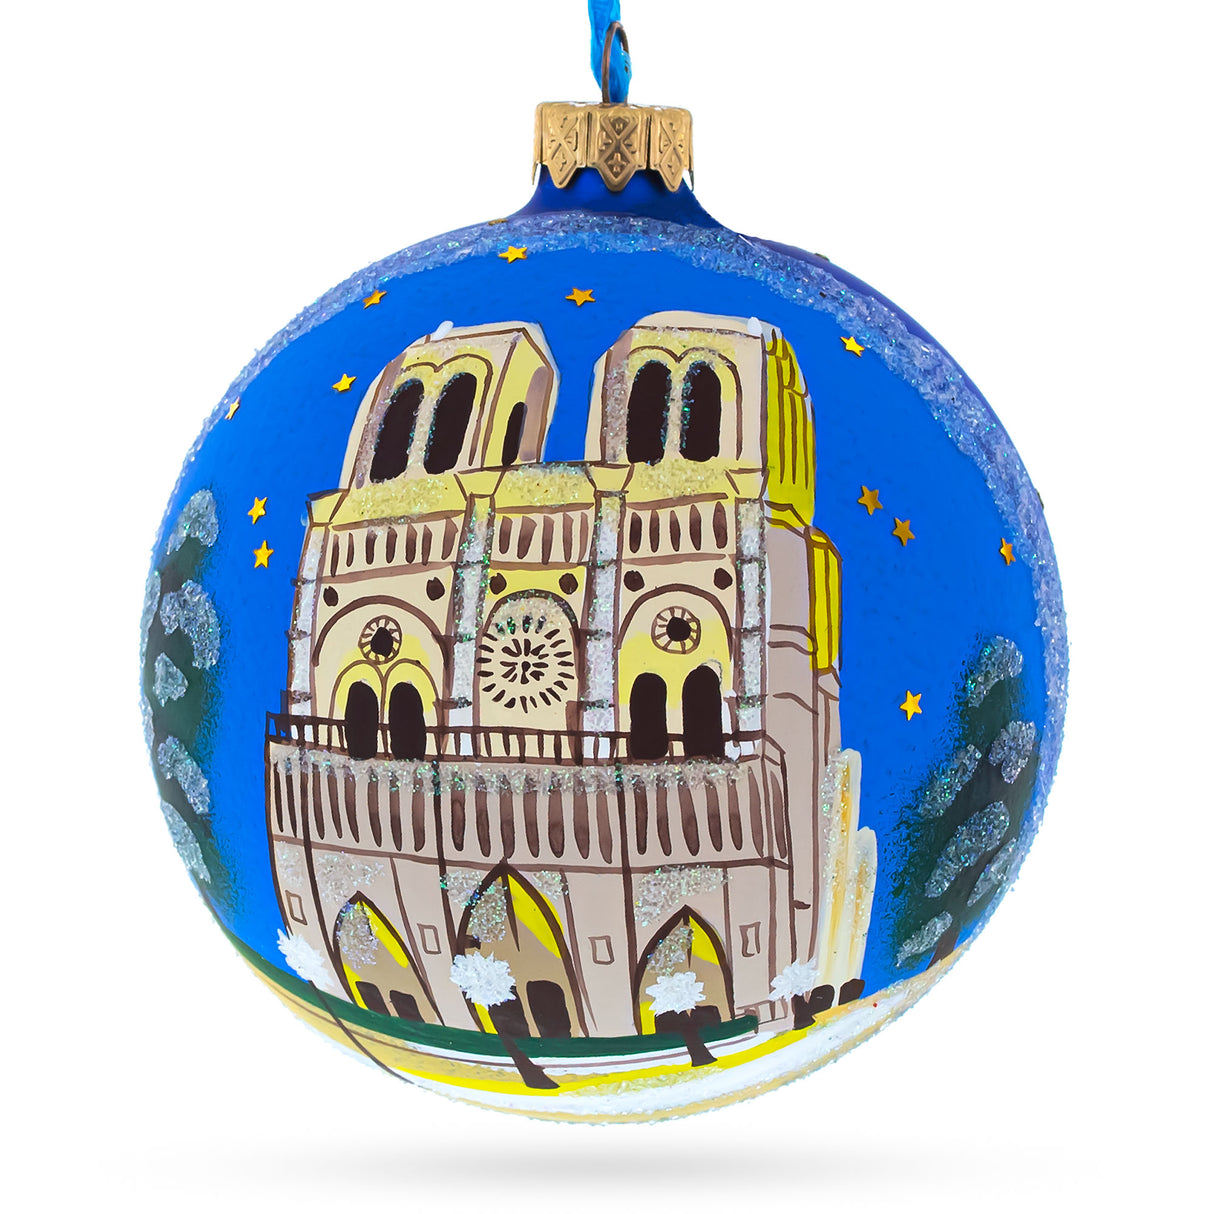 Notre-Dame De Paris, France Glass Ball Christmas Ornament 4 Inches in Multi color, Round shape